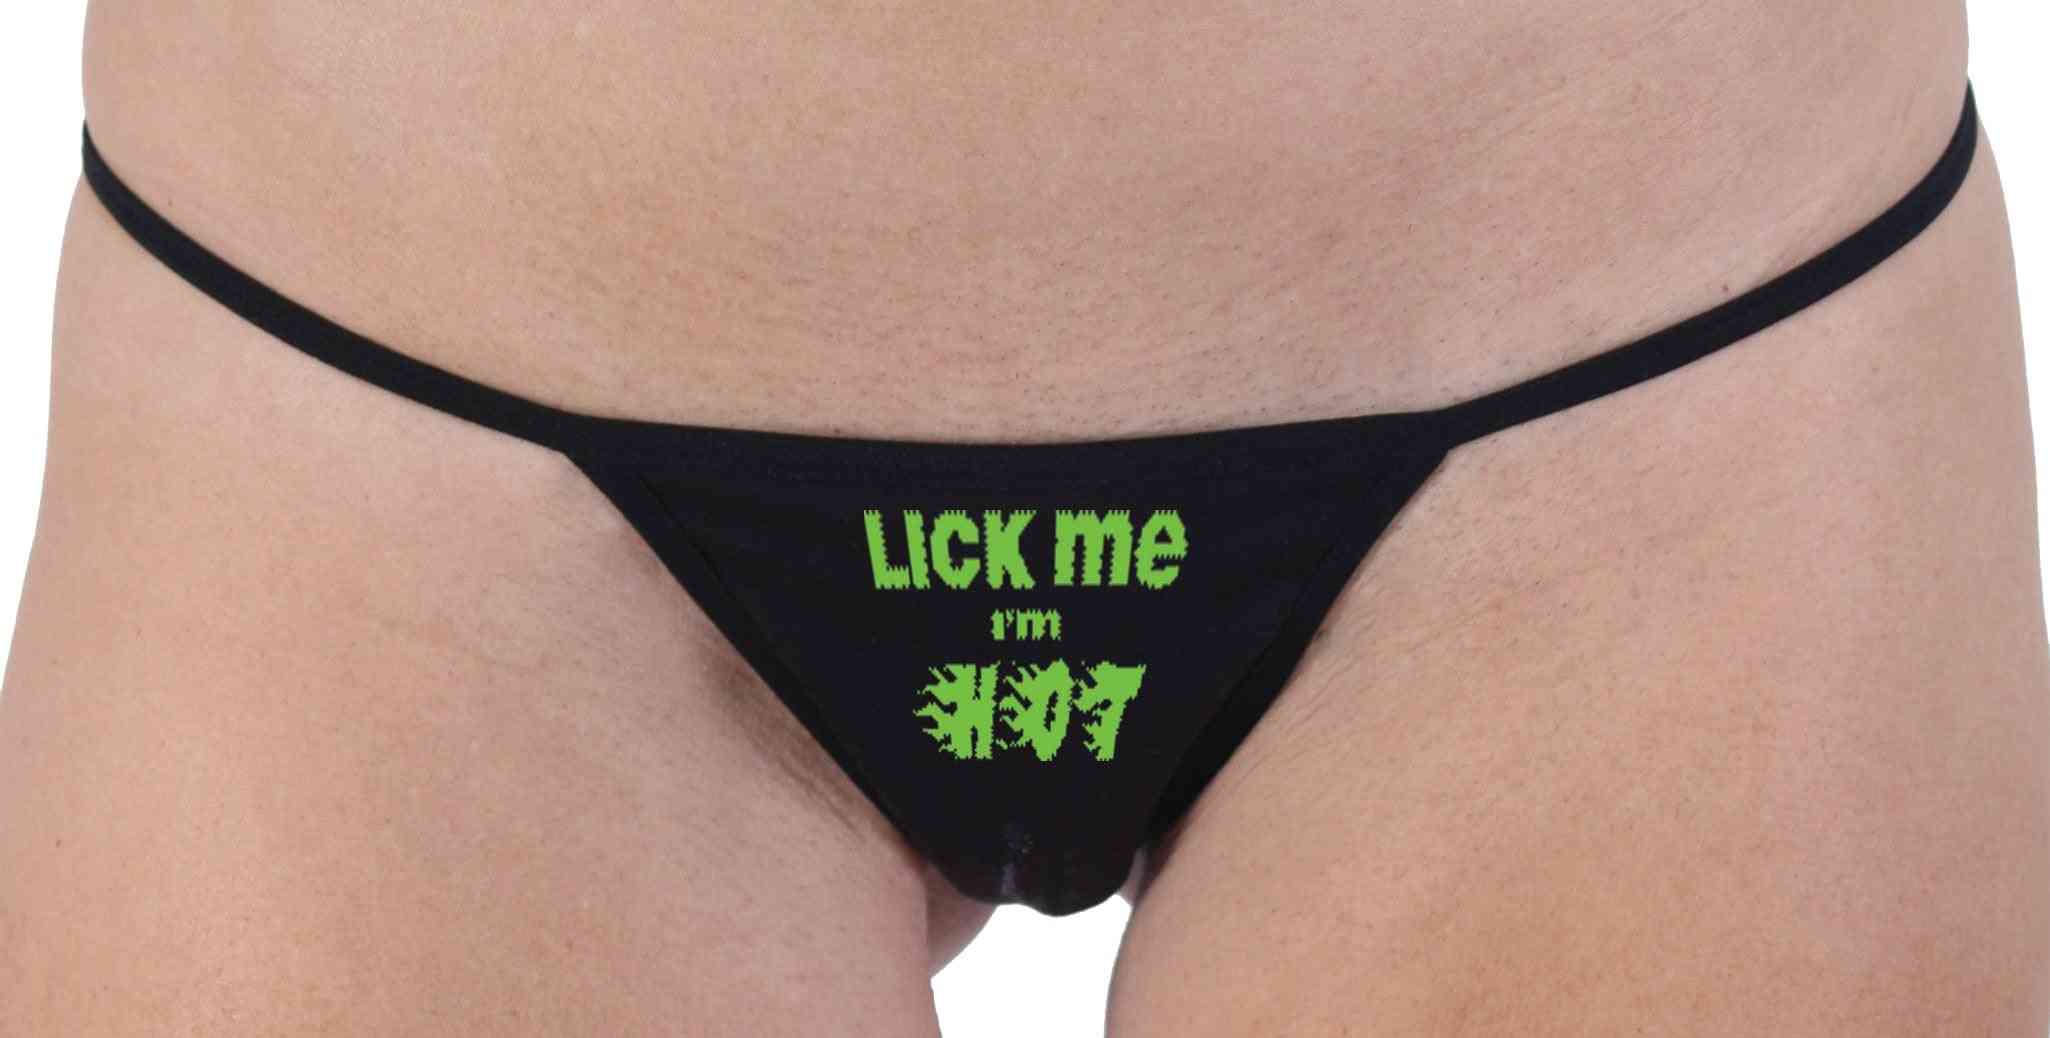 Lick Me I'm Hot Green Graphic Thong